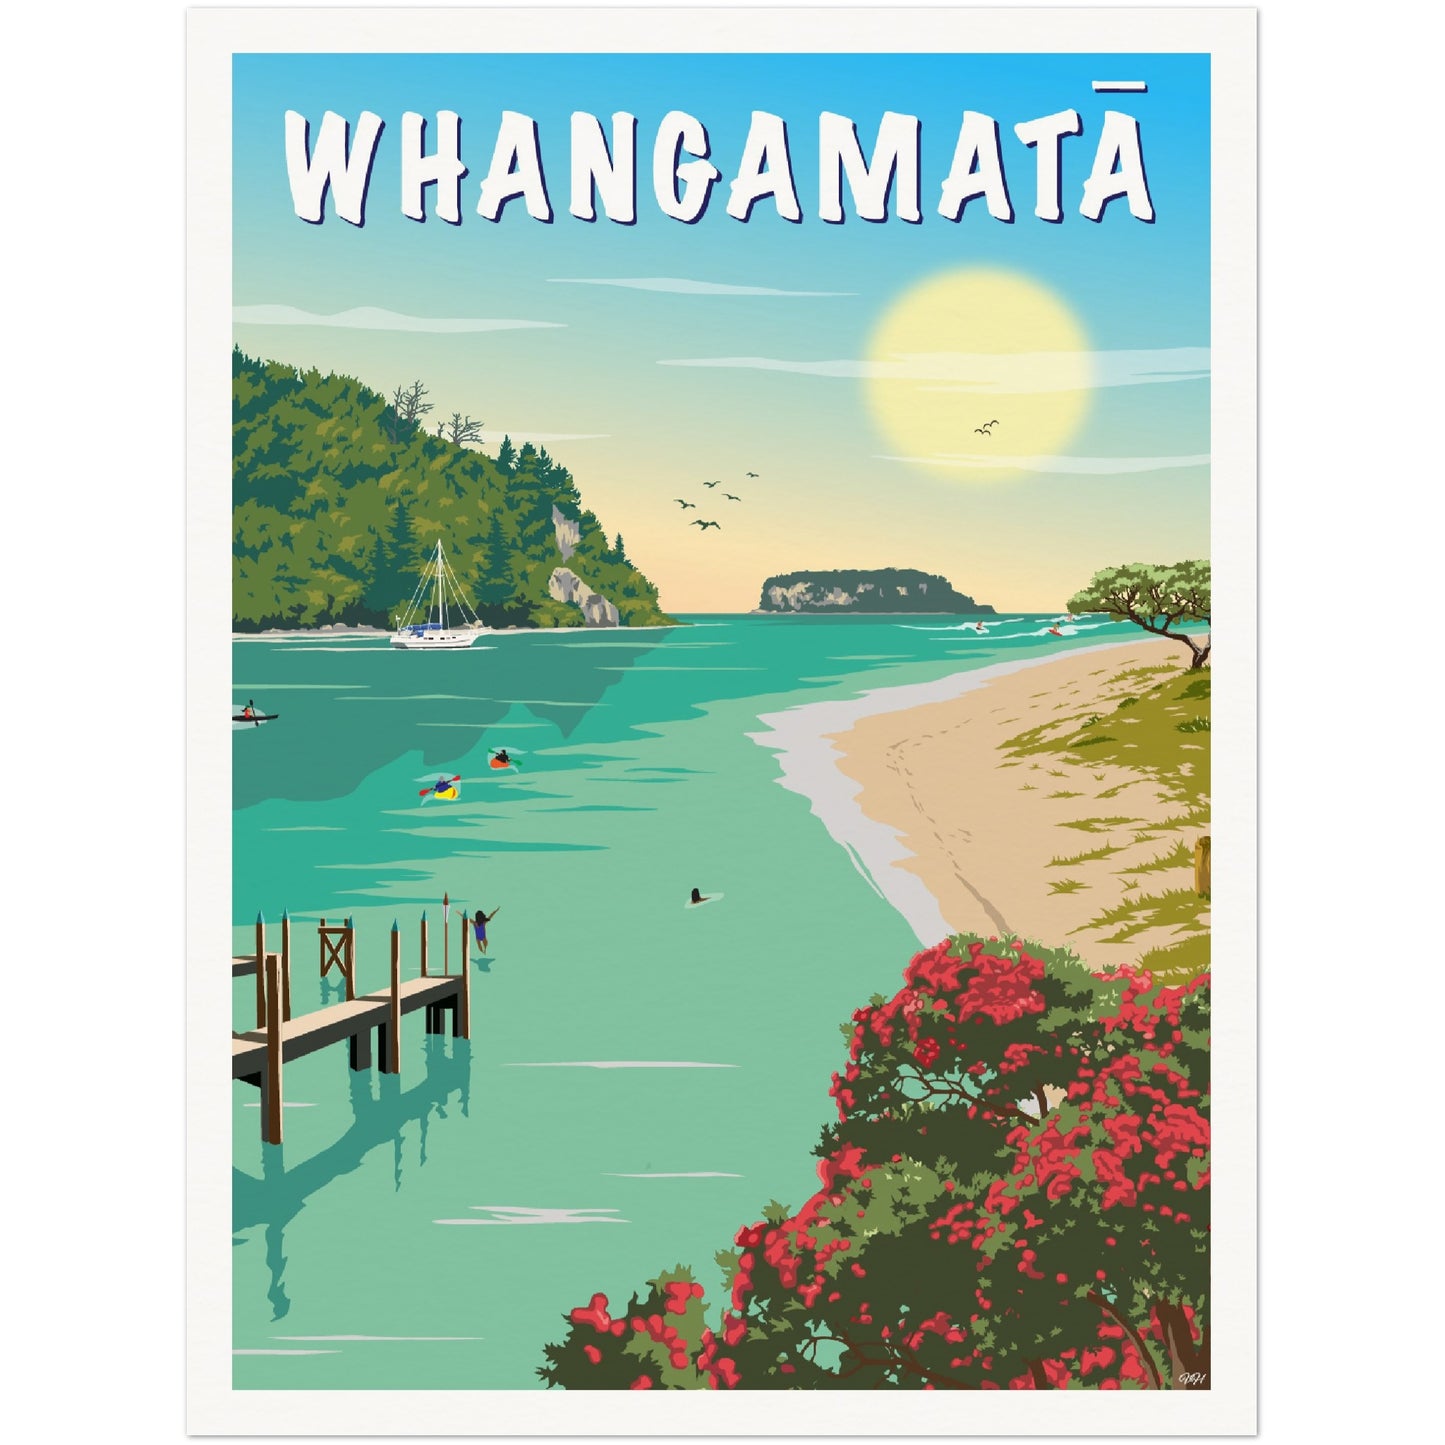 Whangamatā Travel Poster, New Zealand